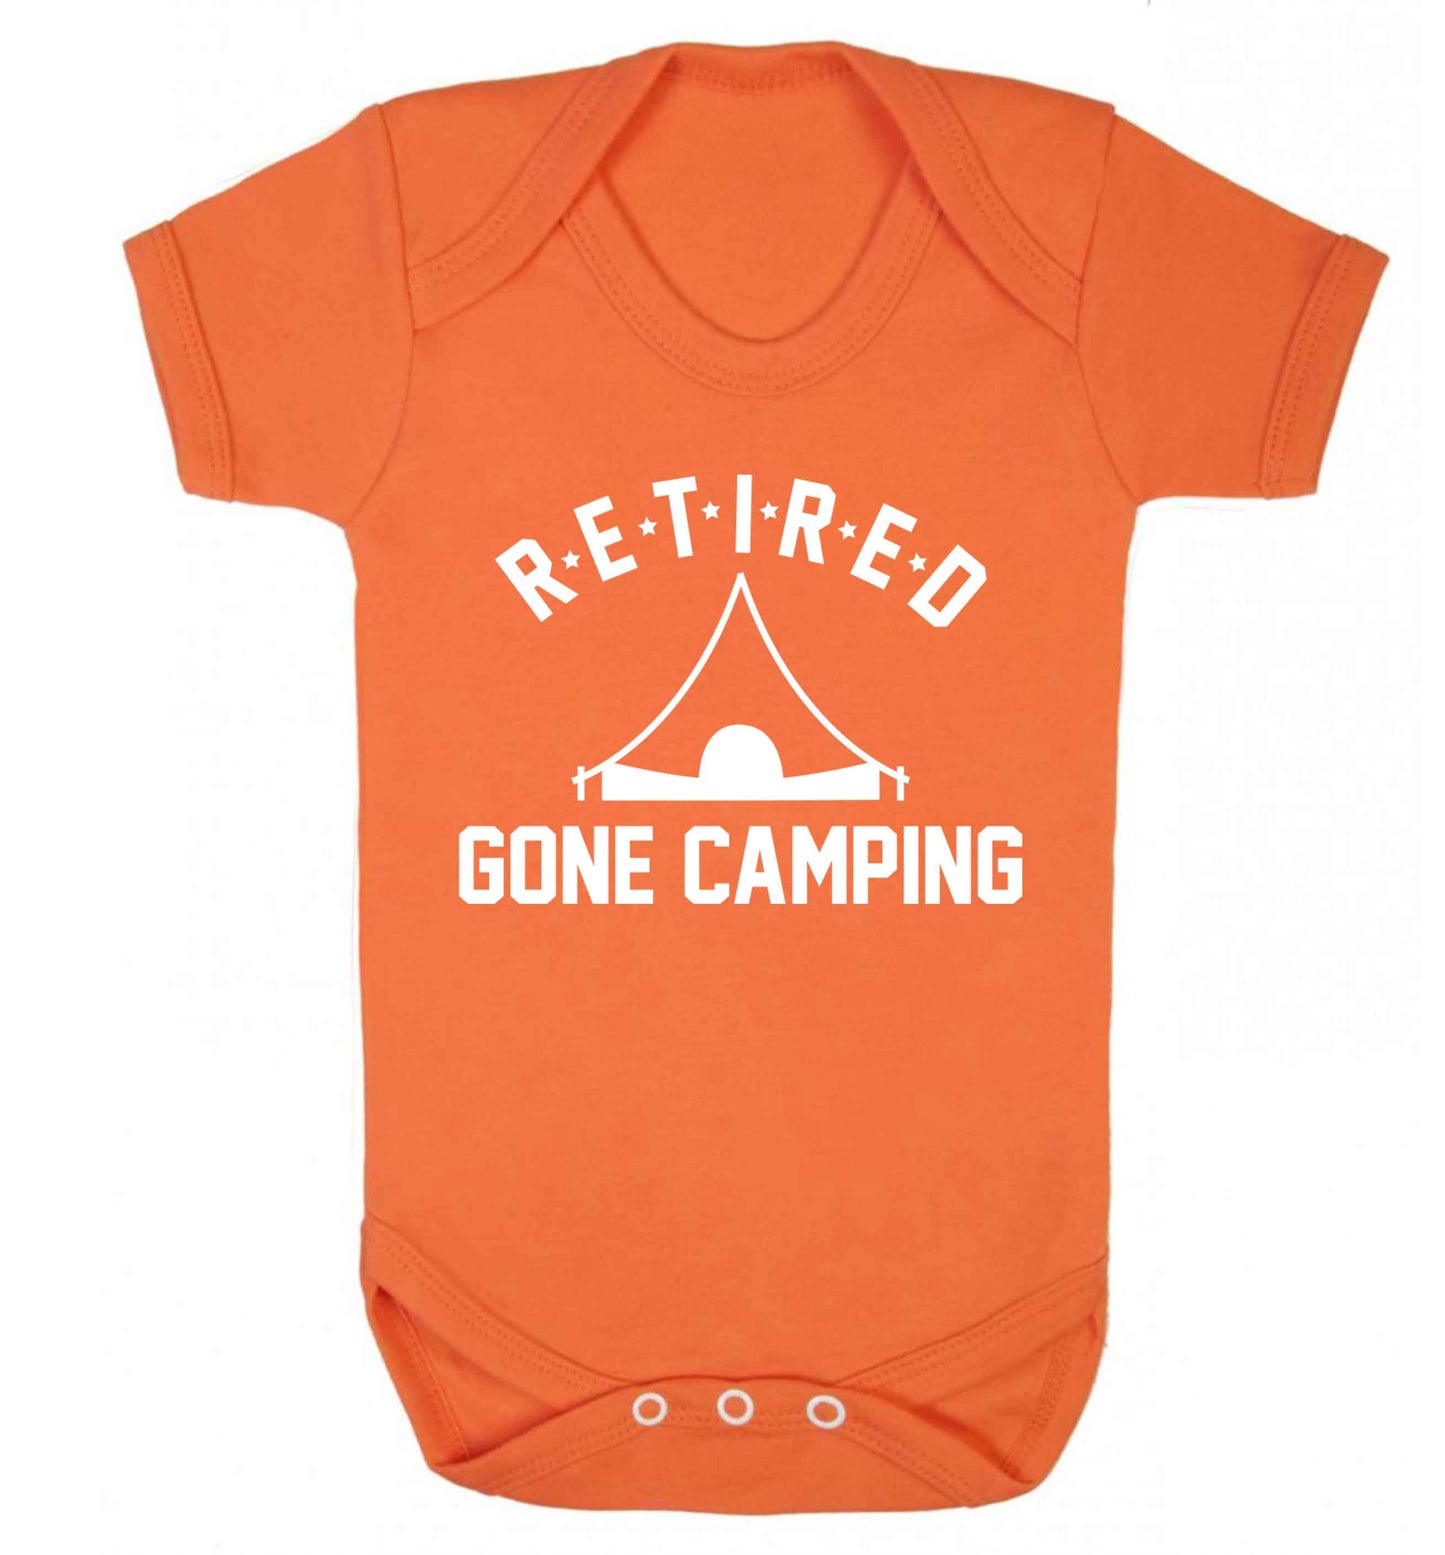 Retired gone camping Baby Vest orange 18-24 months